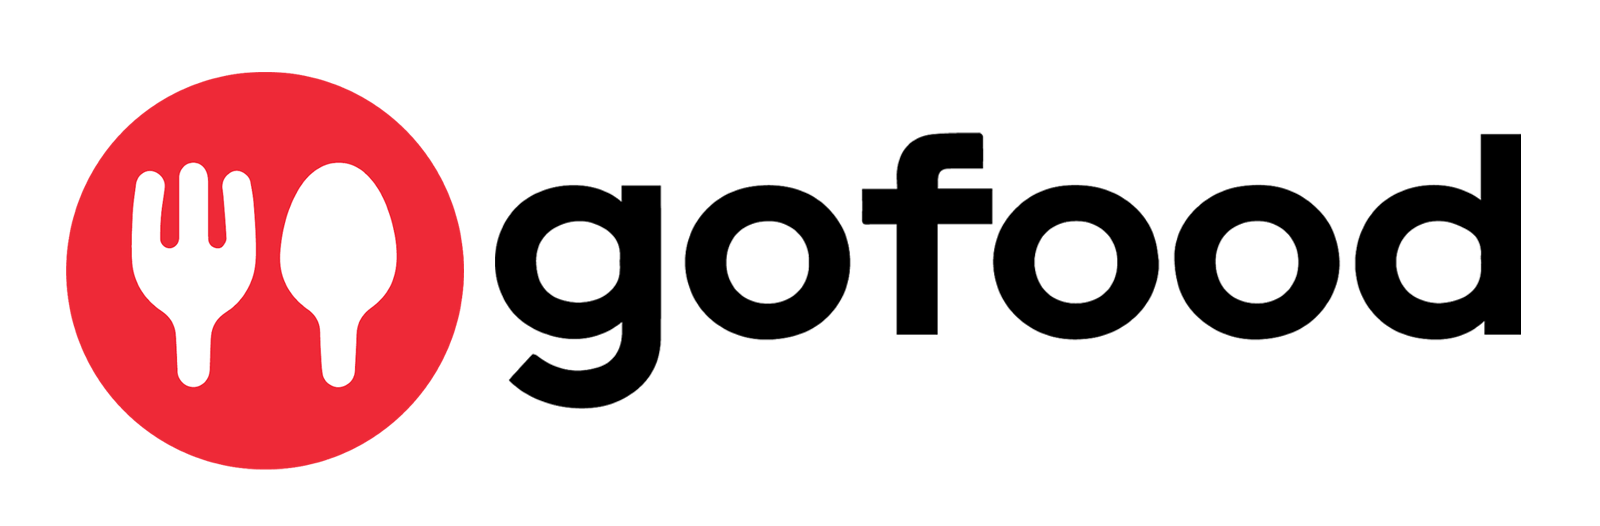 Go Food Logo - Top Ten Go Food Logo Png